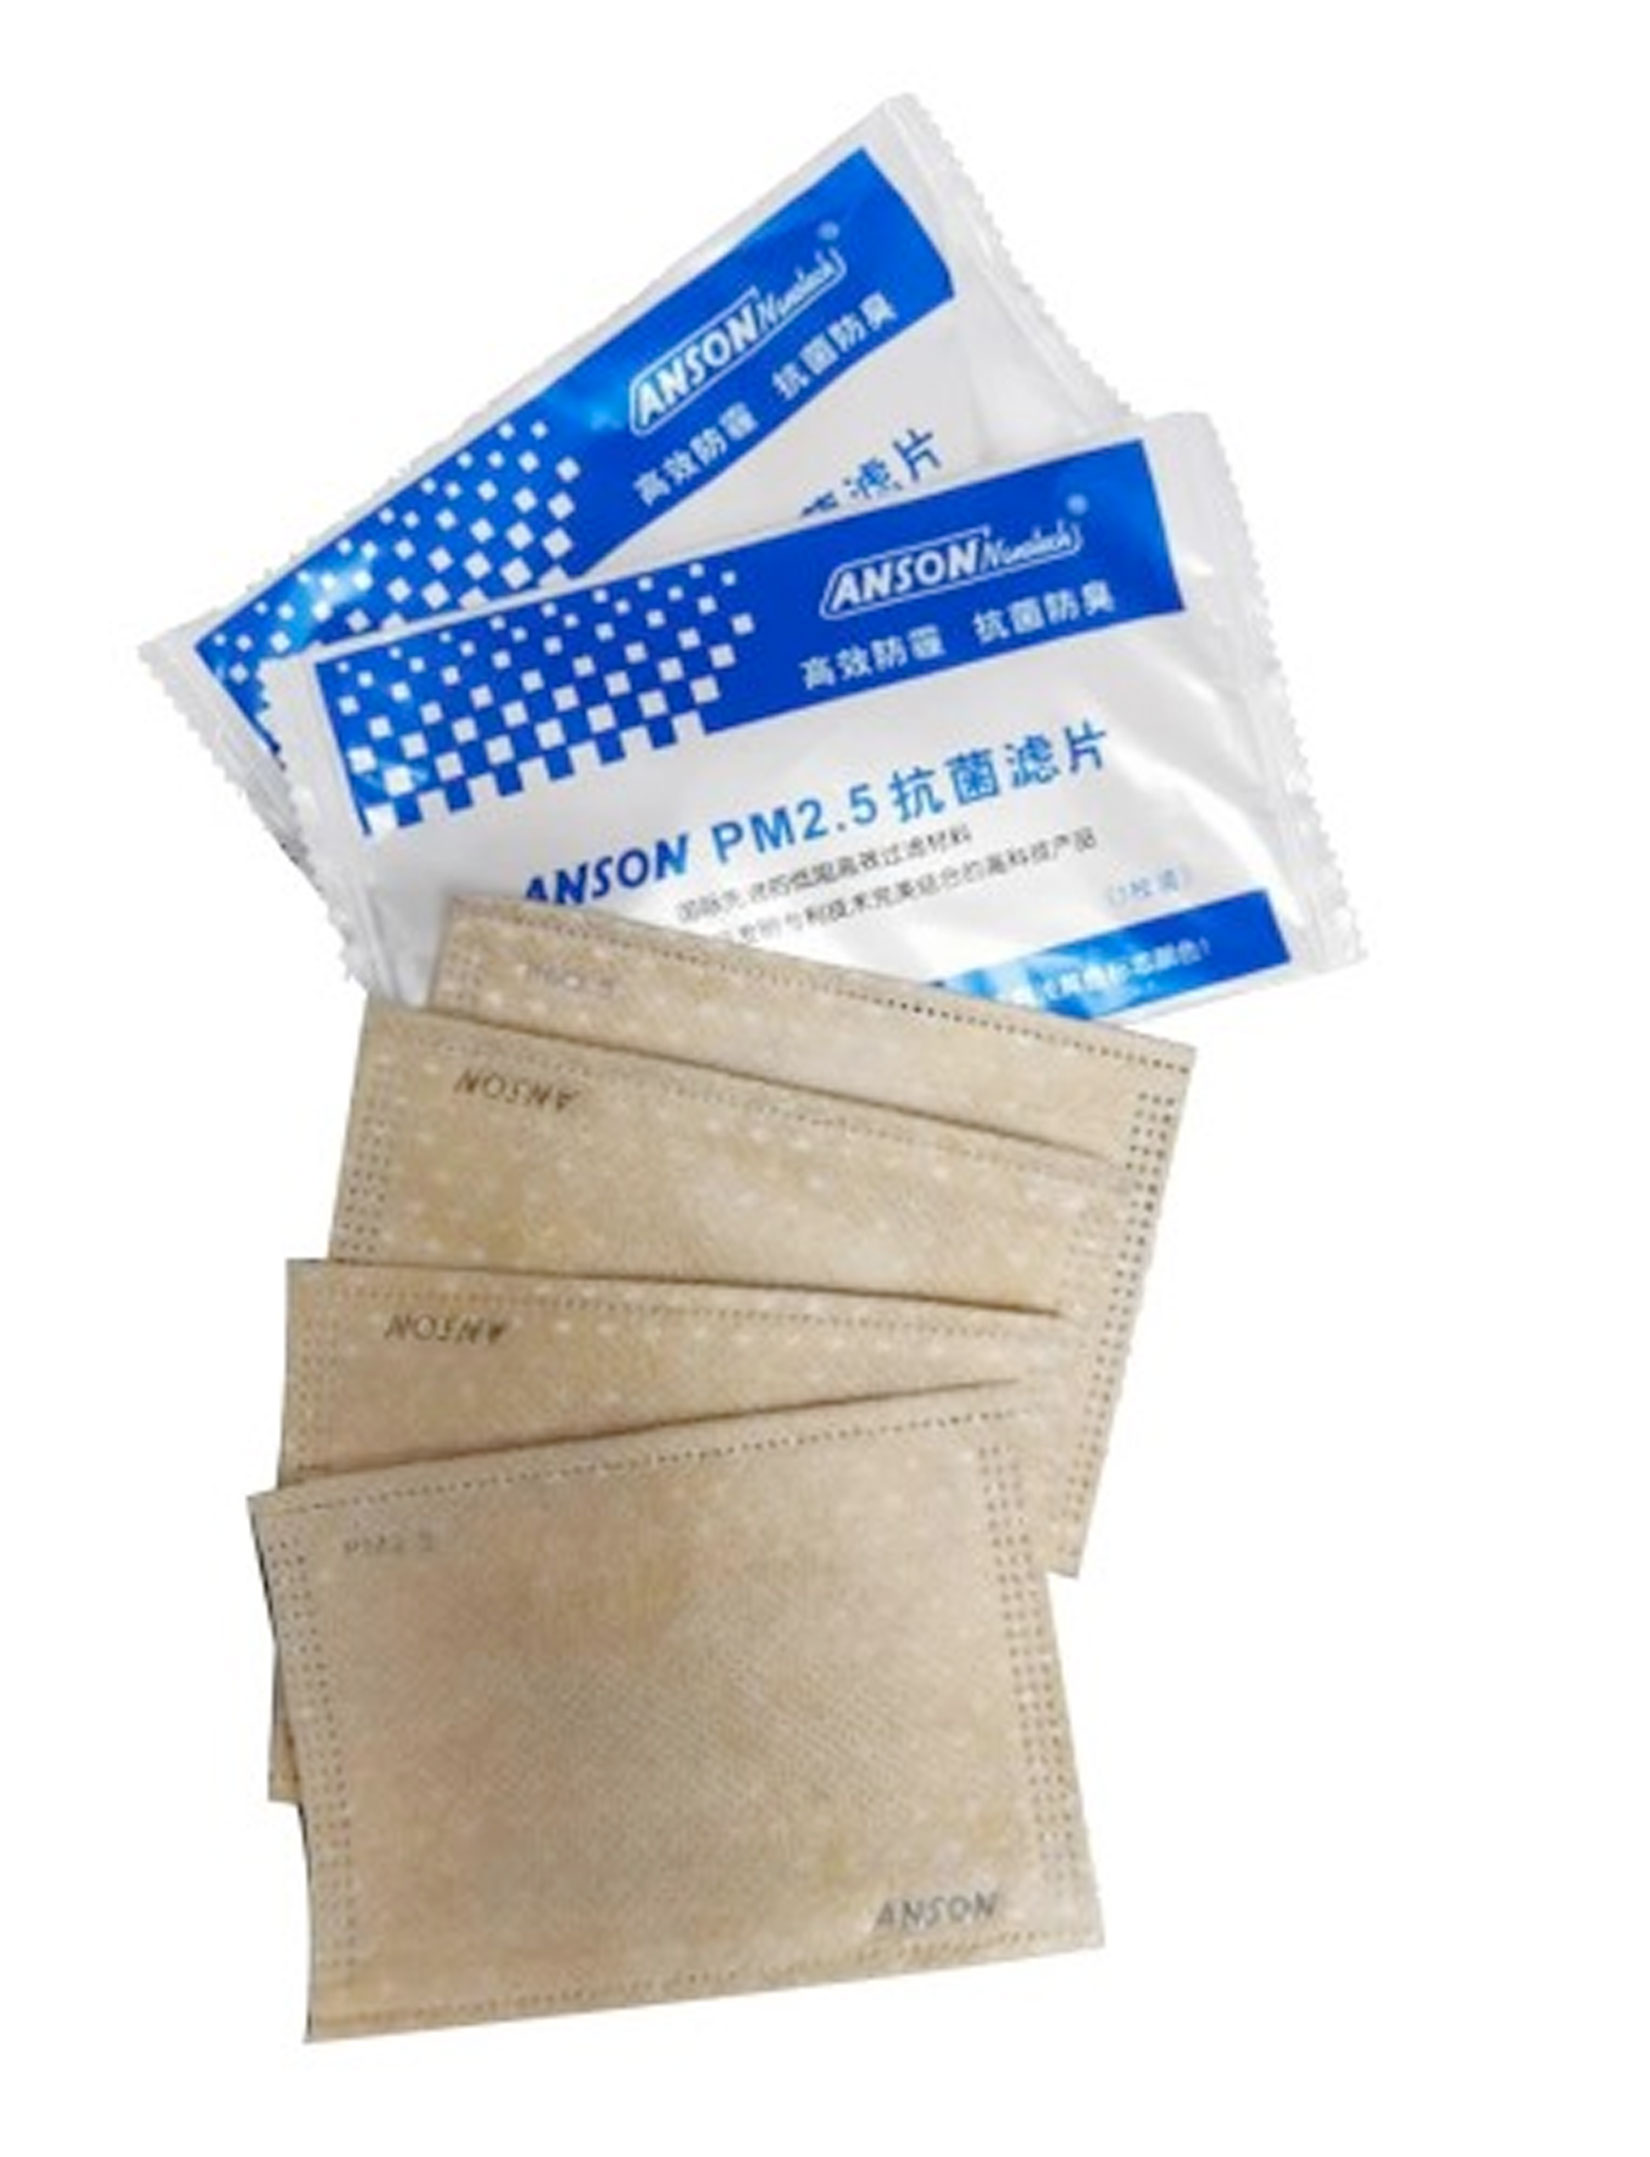 wholesale PM2.5 Filters (Twenty Pack)